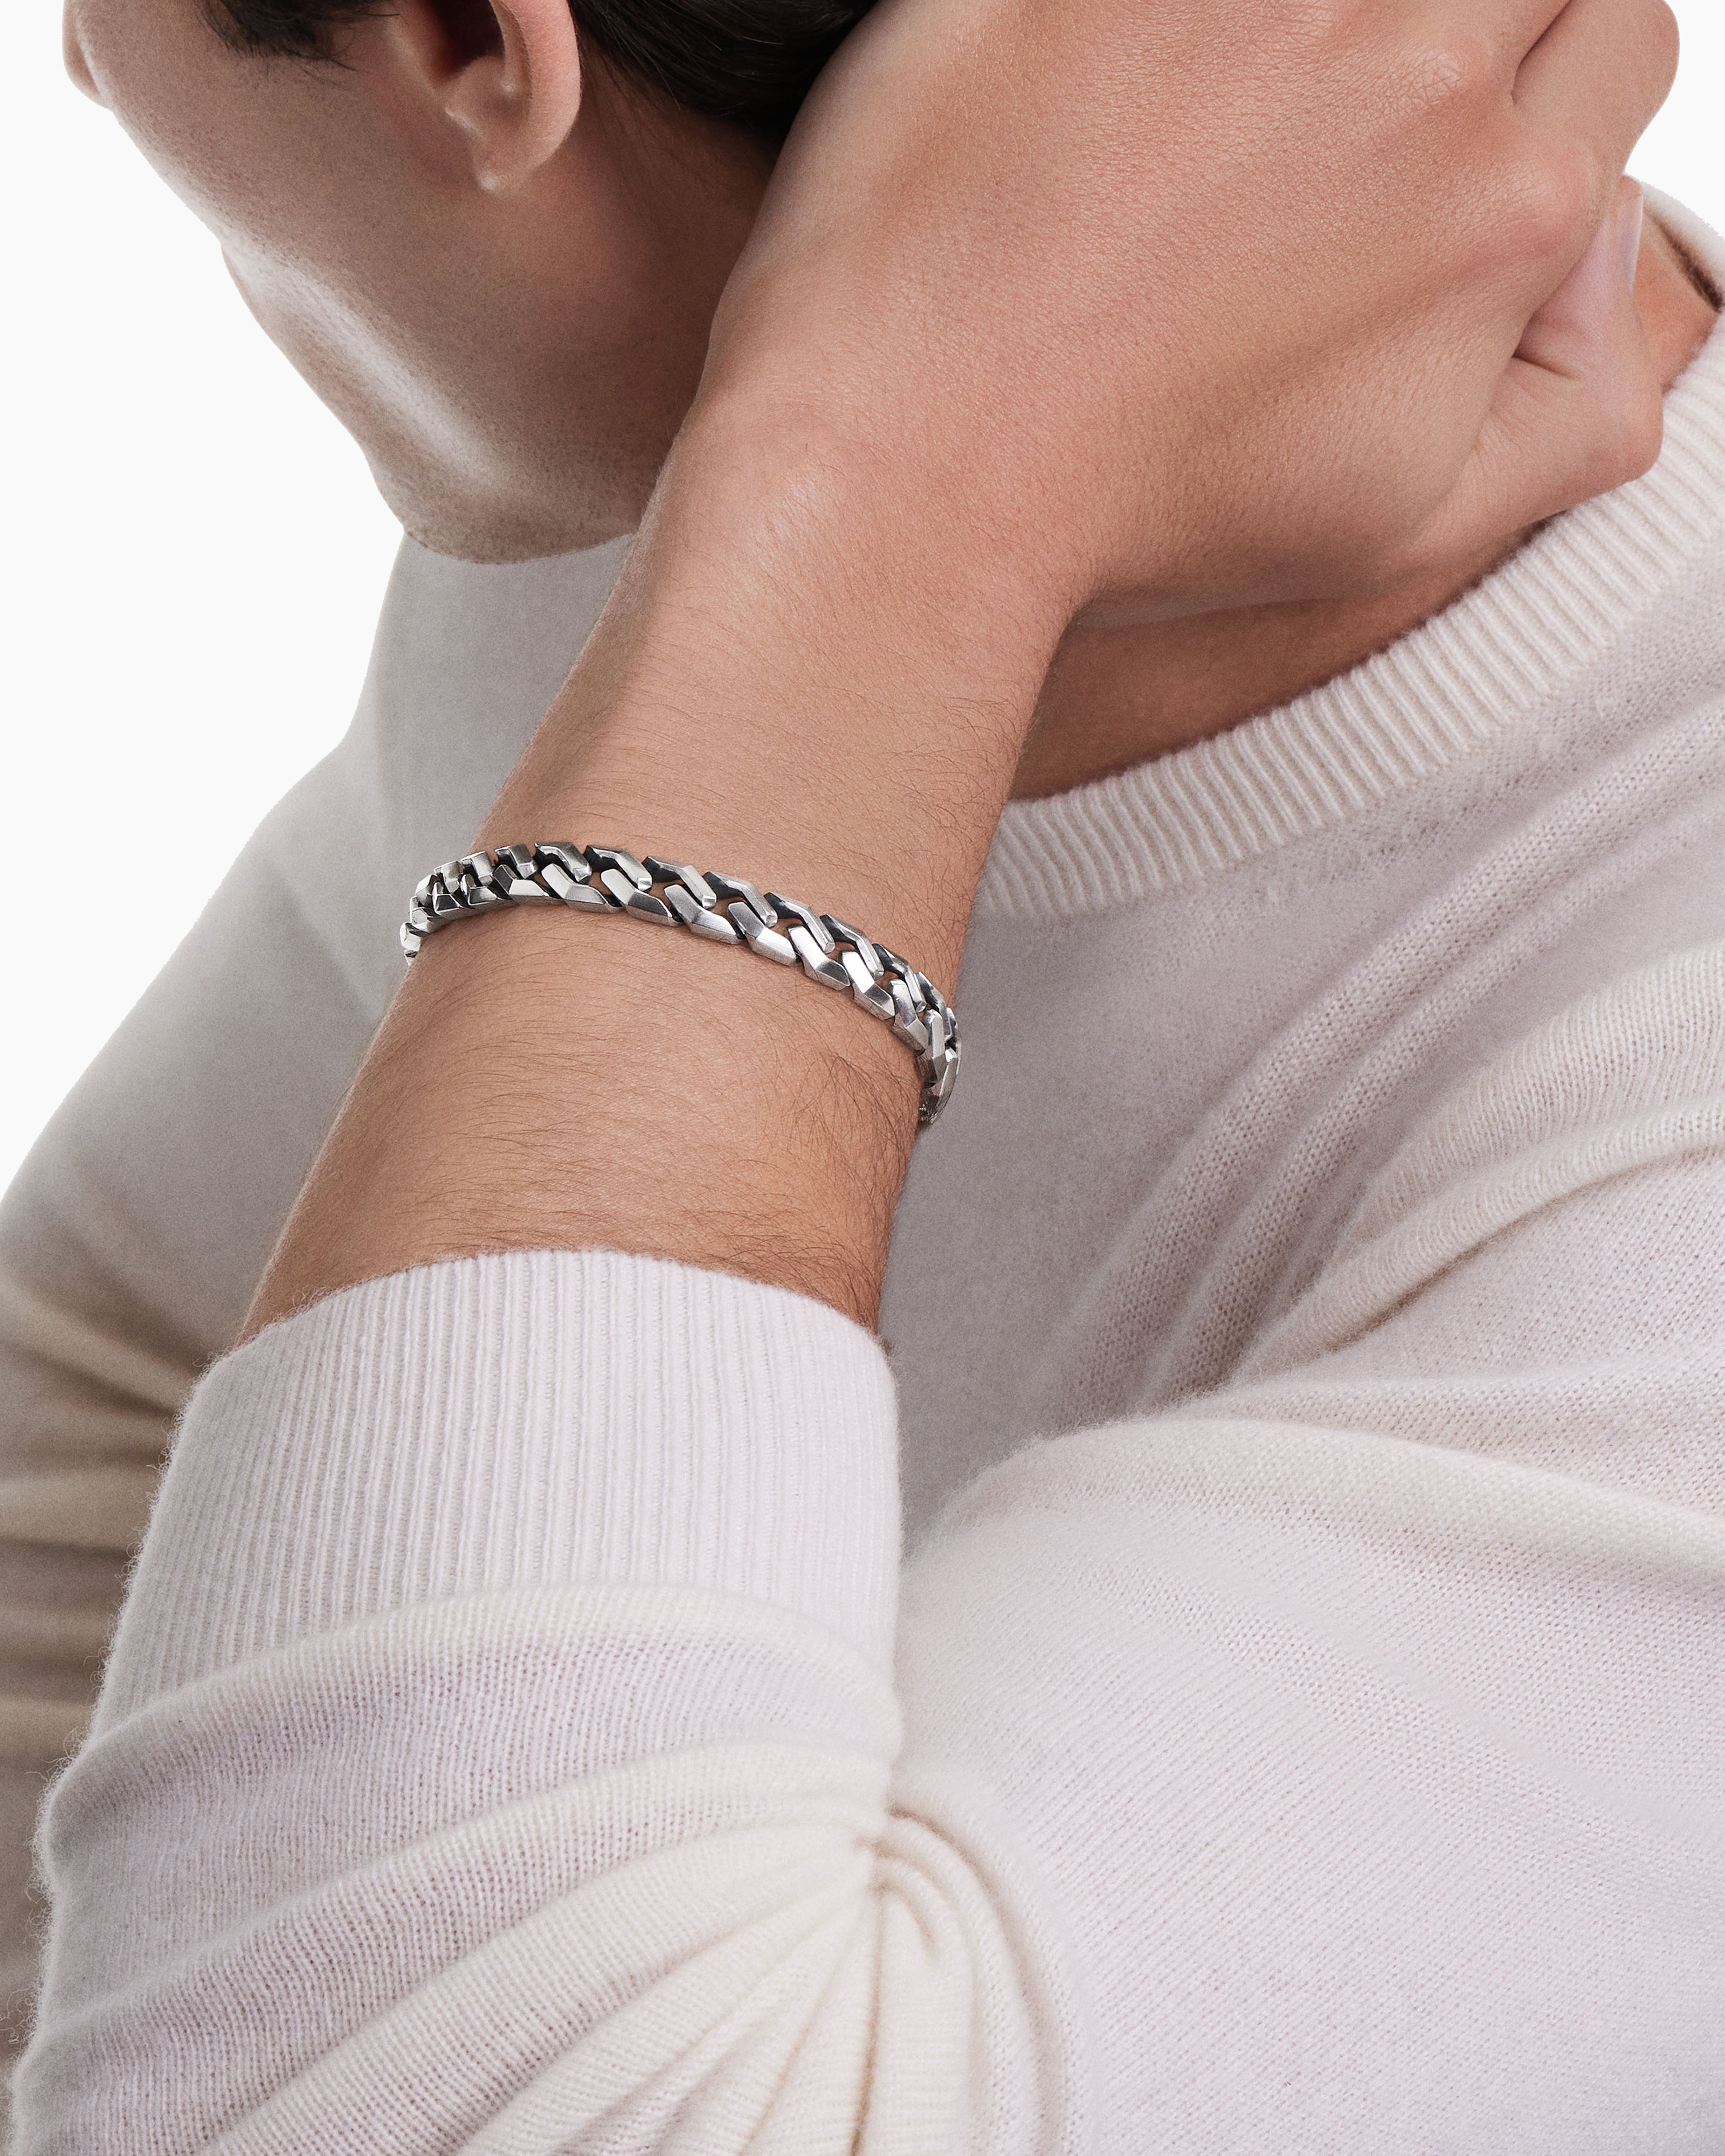 Men's Curb Chain Bracelet - Black Friday Jewelry Sales